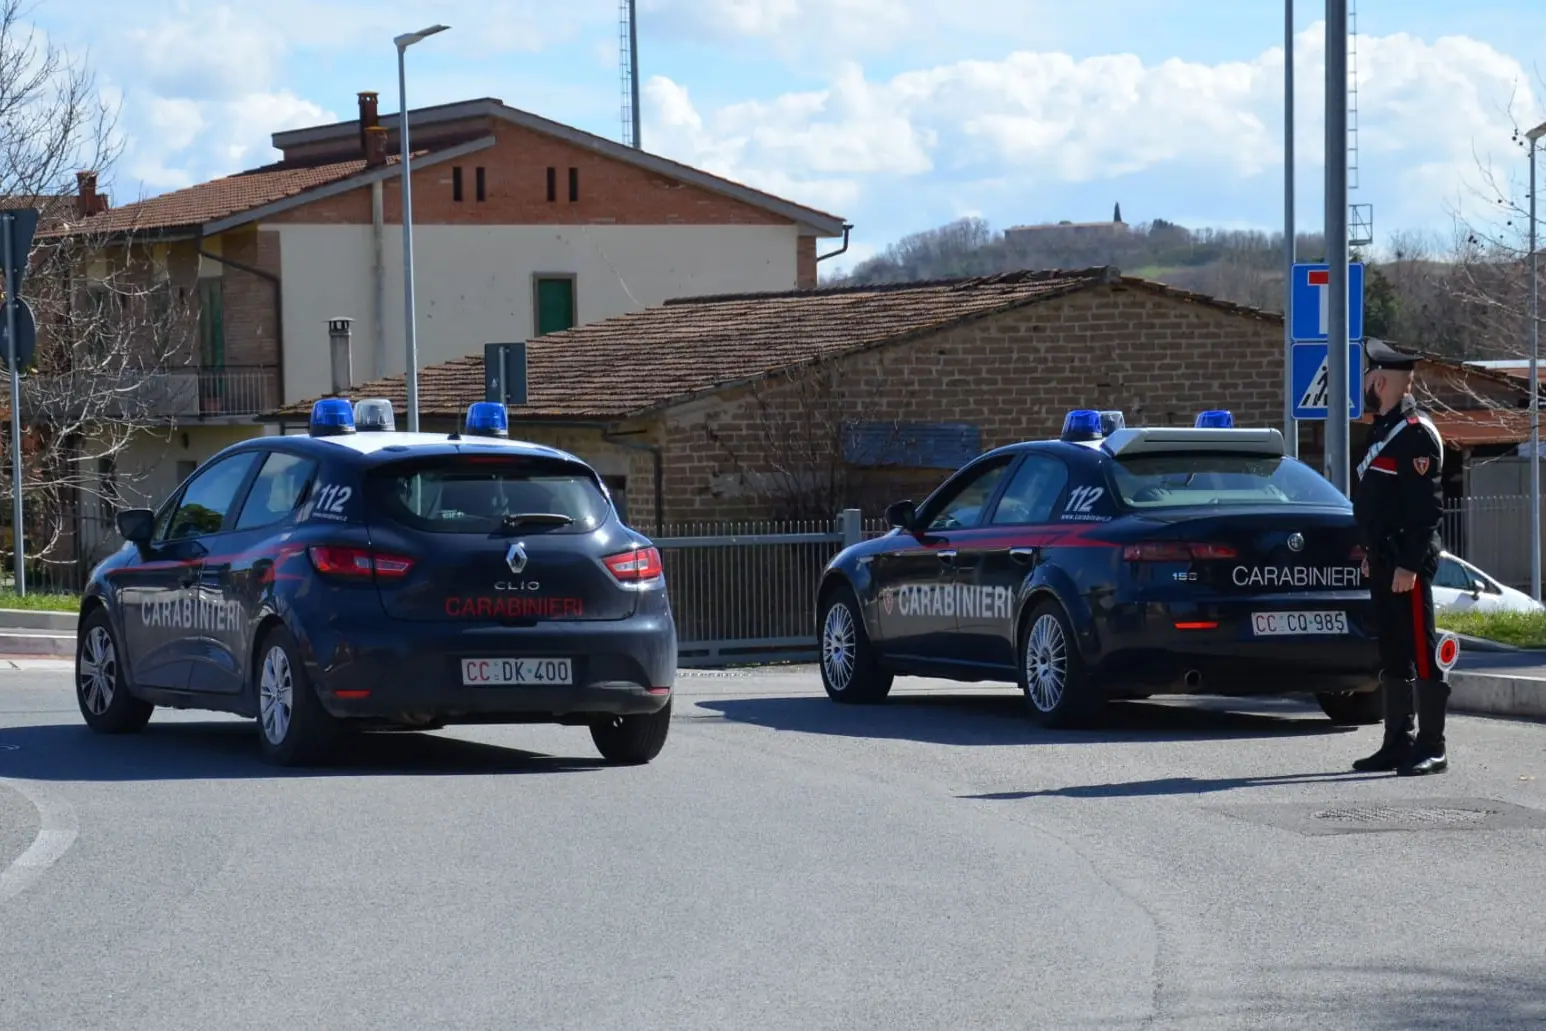 Pattuglie (foto carabinieri)